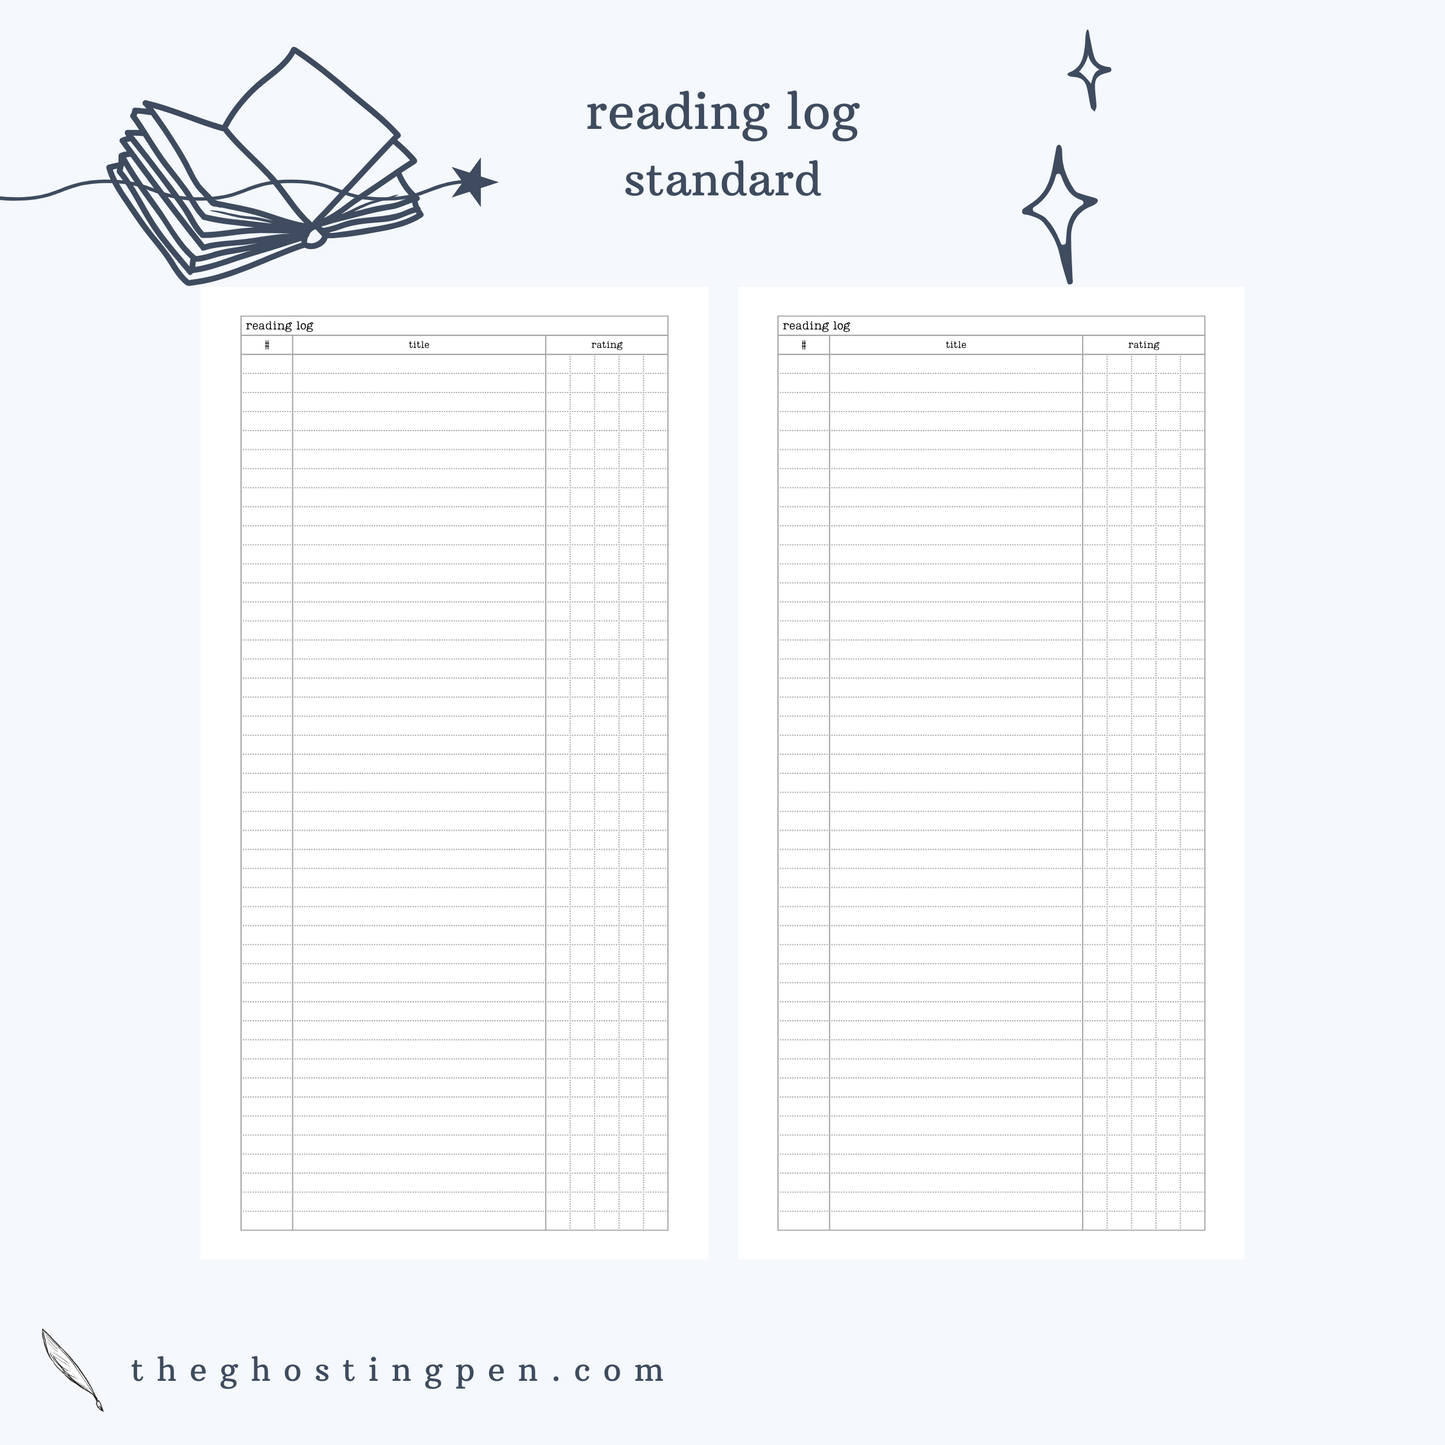 the reading log